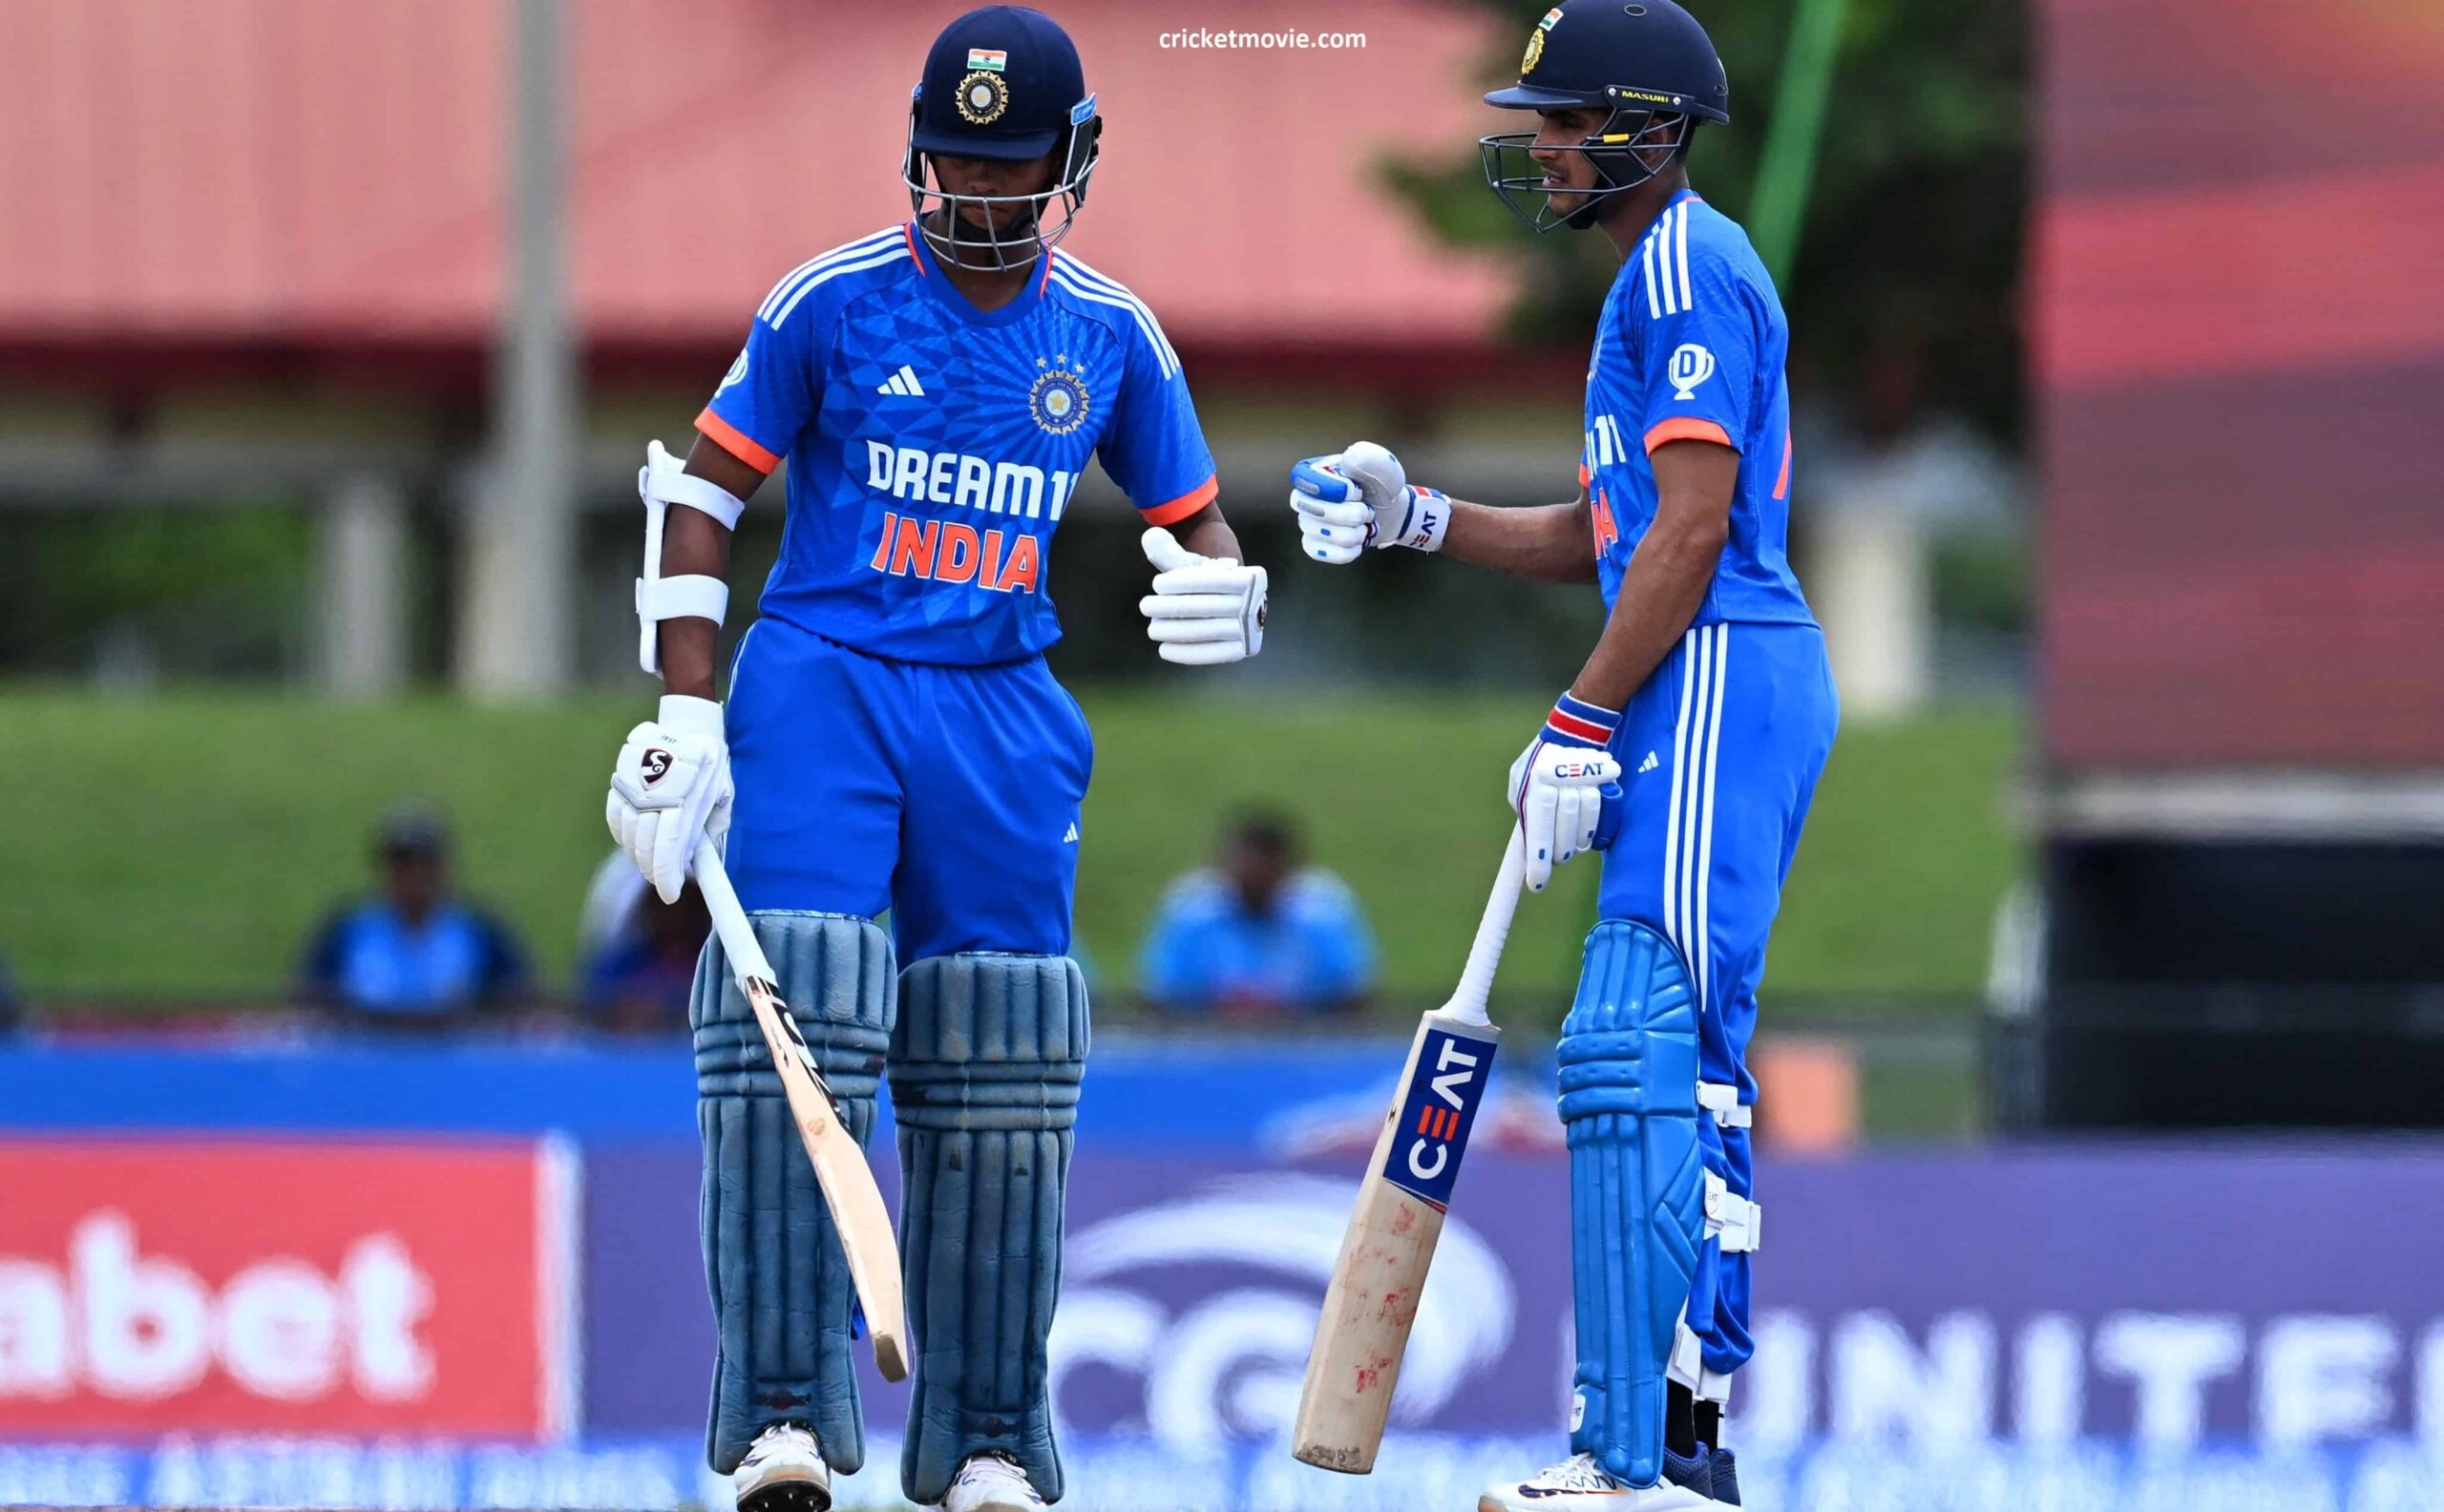 Team India level the T20I series against West Indies-cricketmovie.com